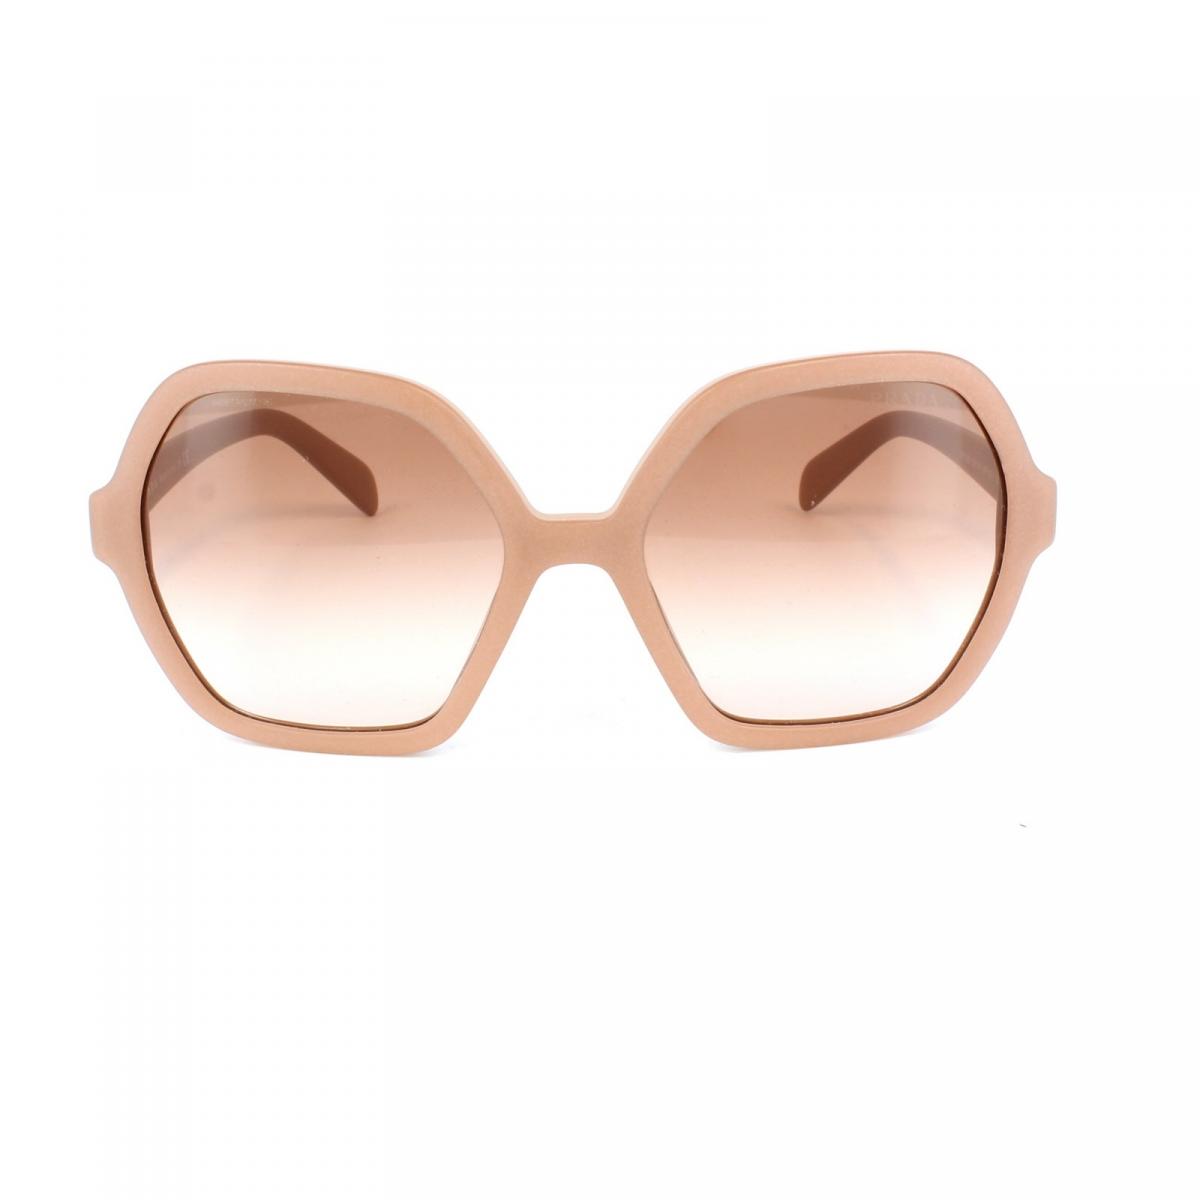 discountedsunglasses.co.uk, Prada sunglasses, £136